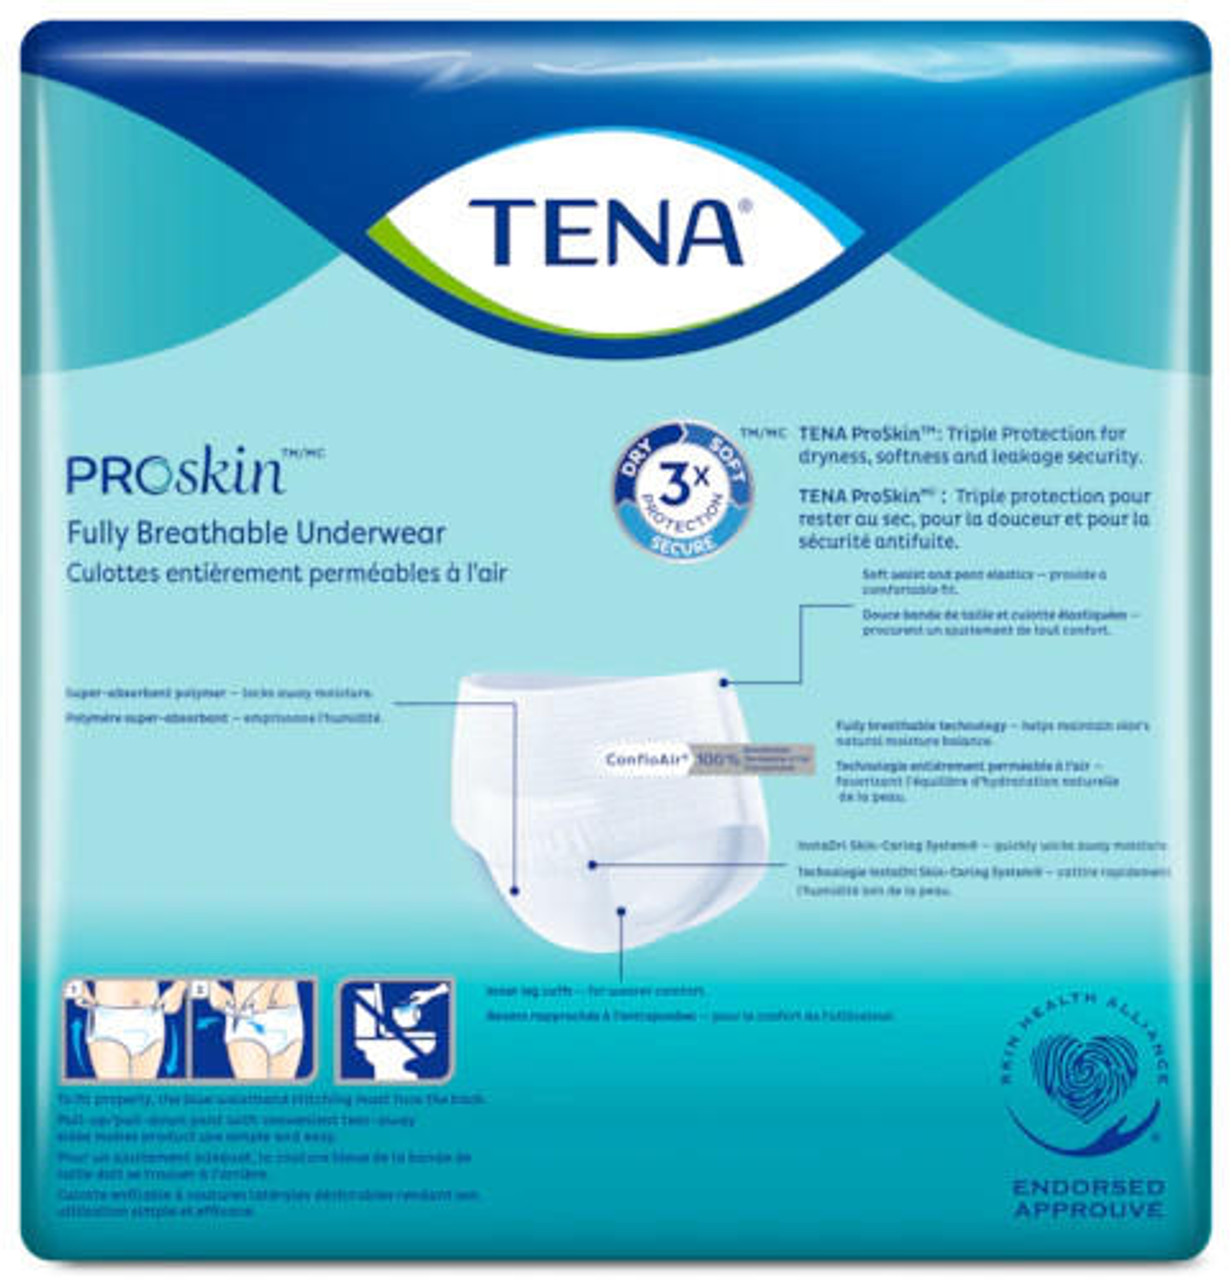 TENA Protective Underwear Plus